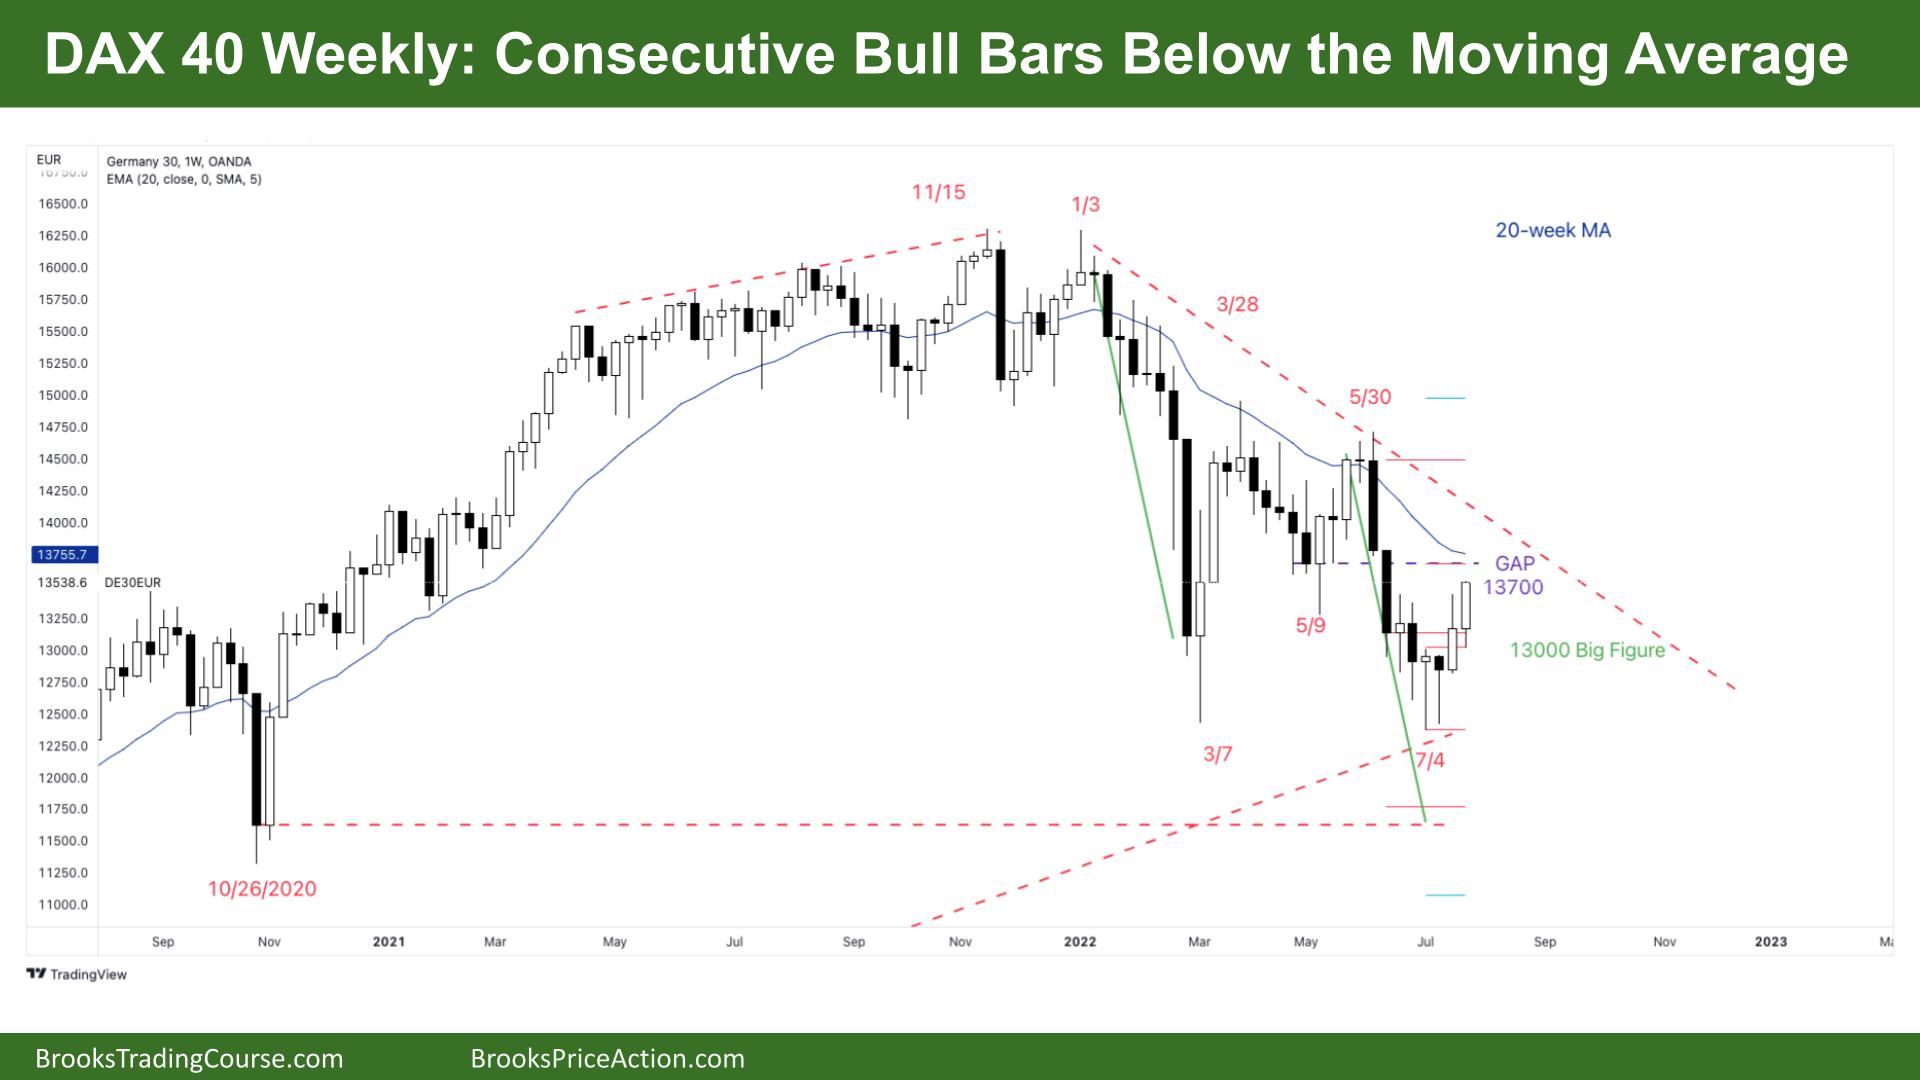 DAX 40 Weekly Consecutive Bull Bars Below the Moving Average